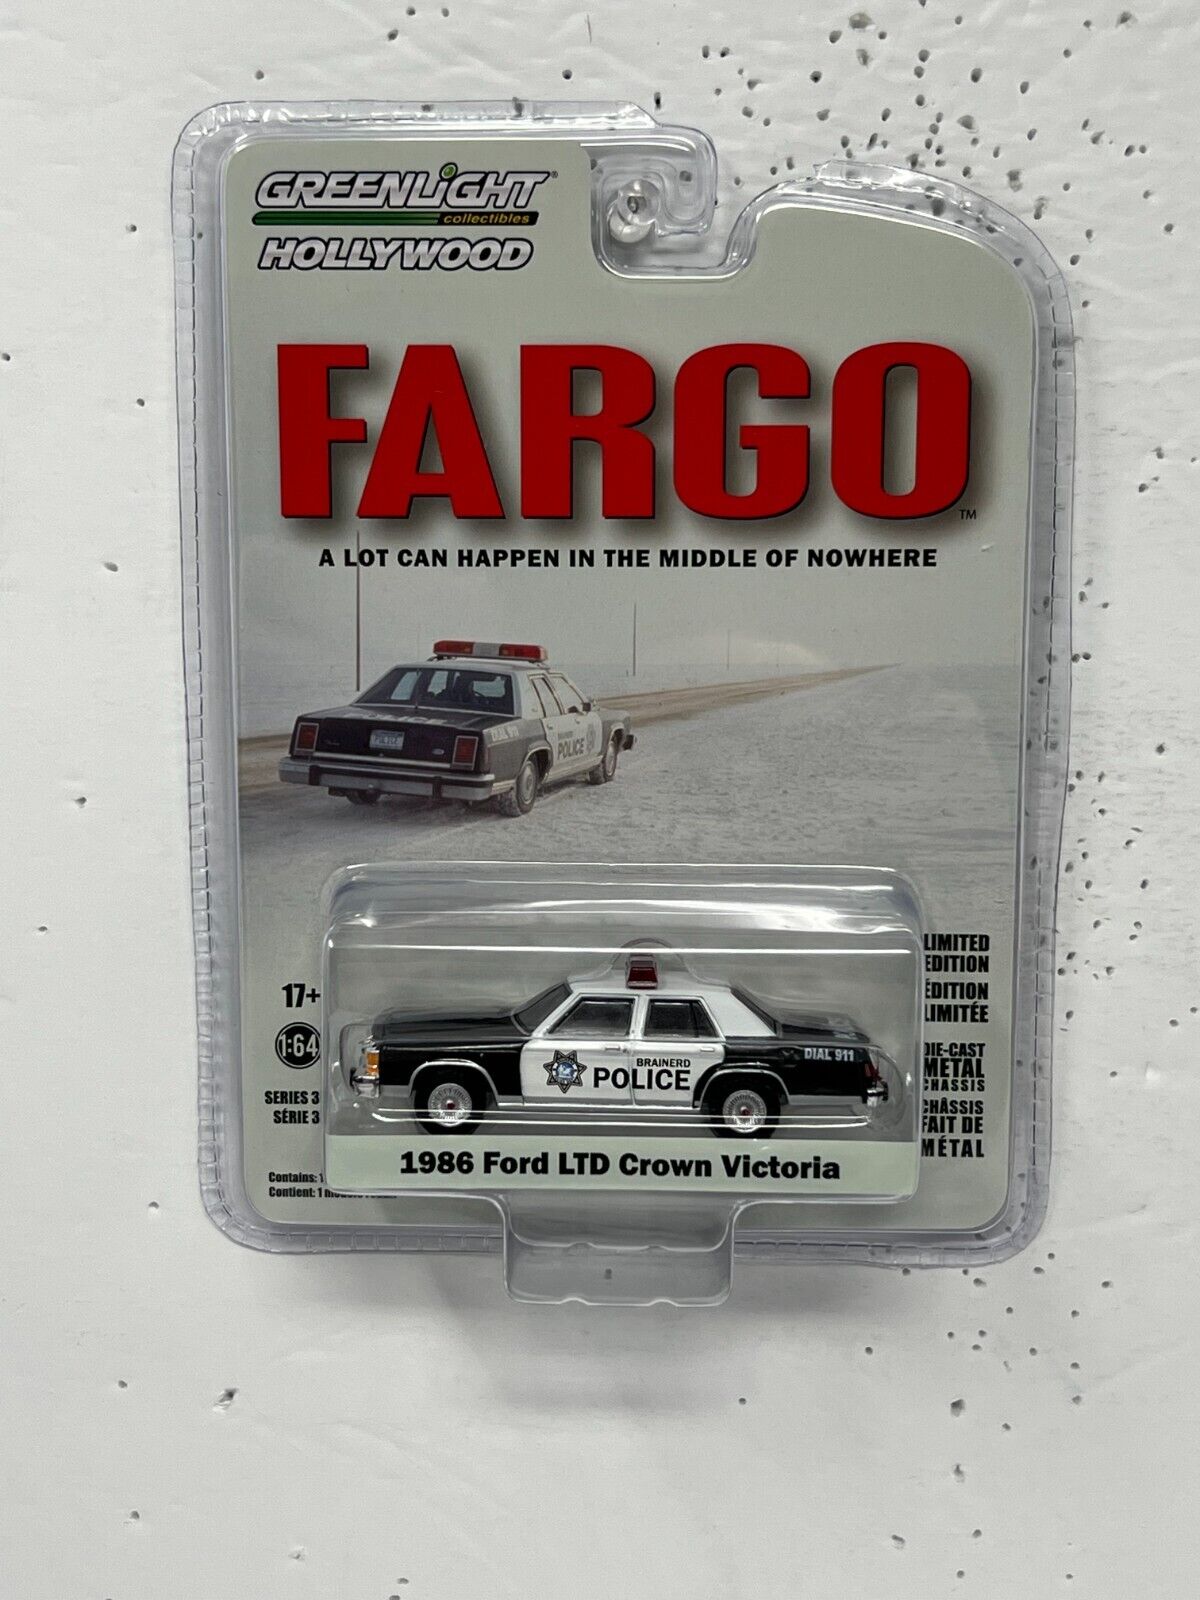 Greenlight Hollywood Fargo 1986 Ford LTD Crown Victoria 1:64 Diecast